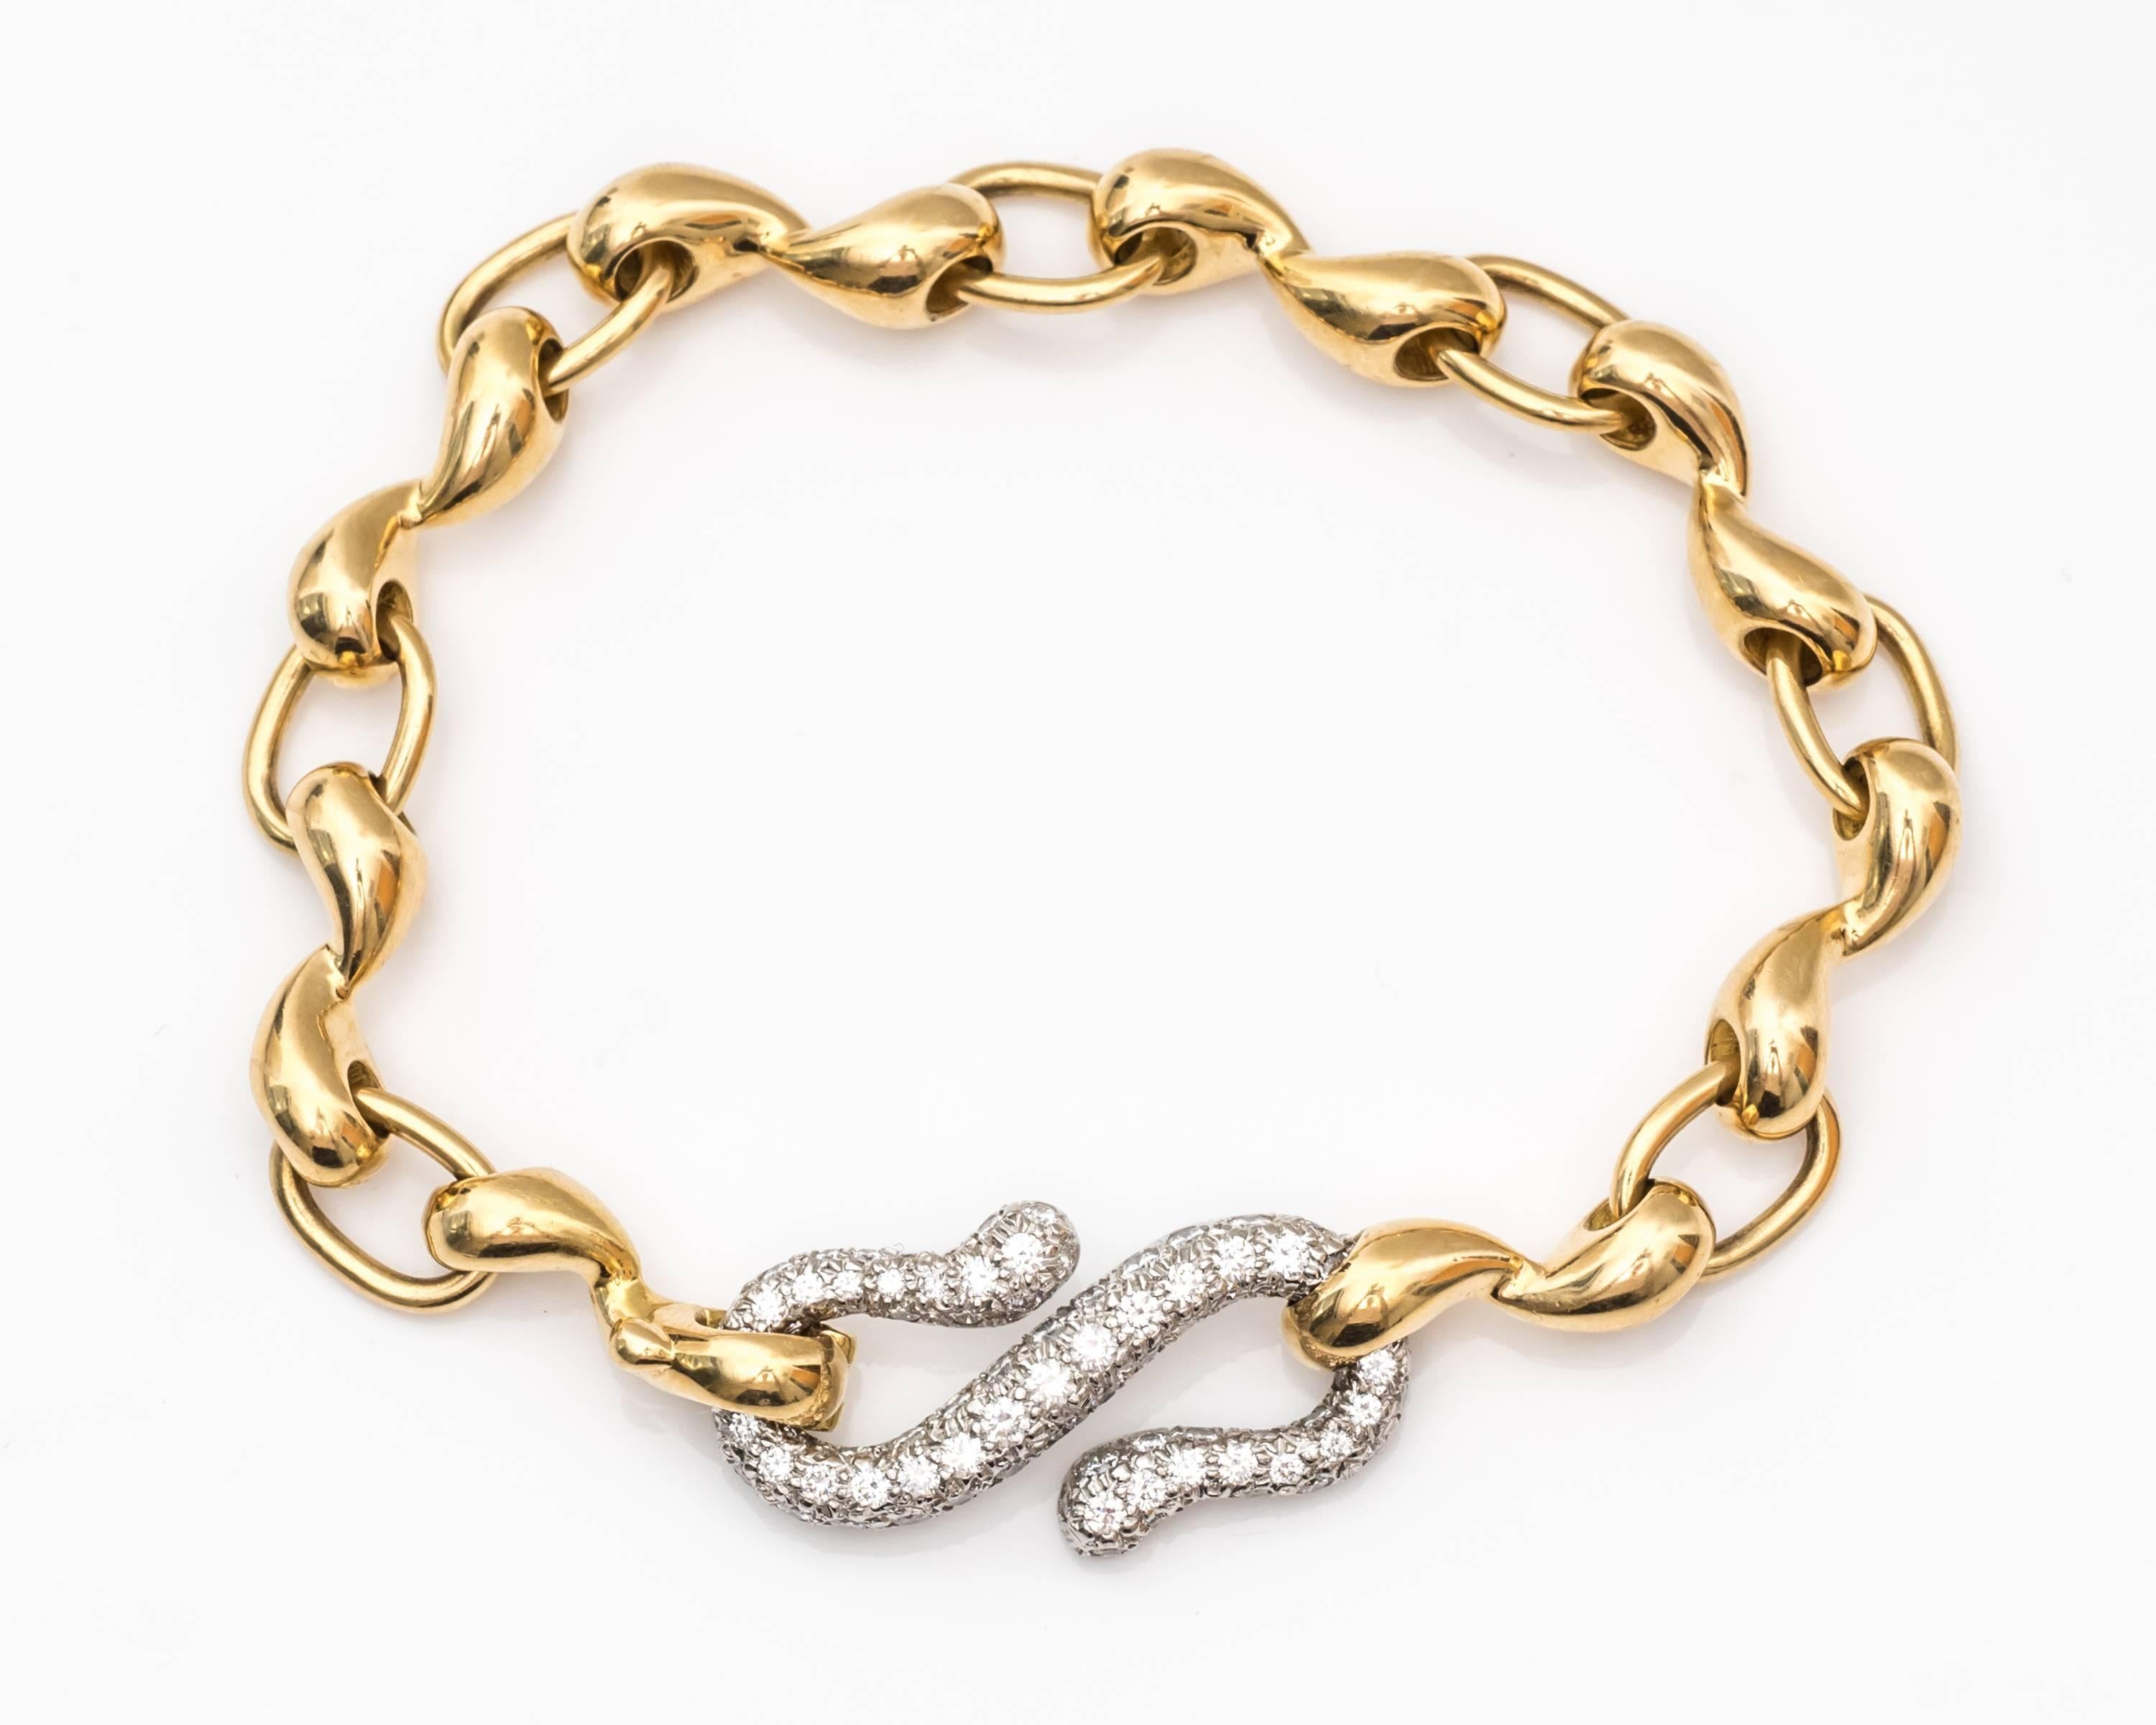 Tiffany & Co. Bracelet en platine et or 18 carats
Maillon en 